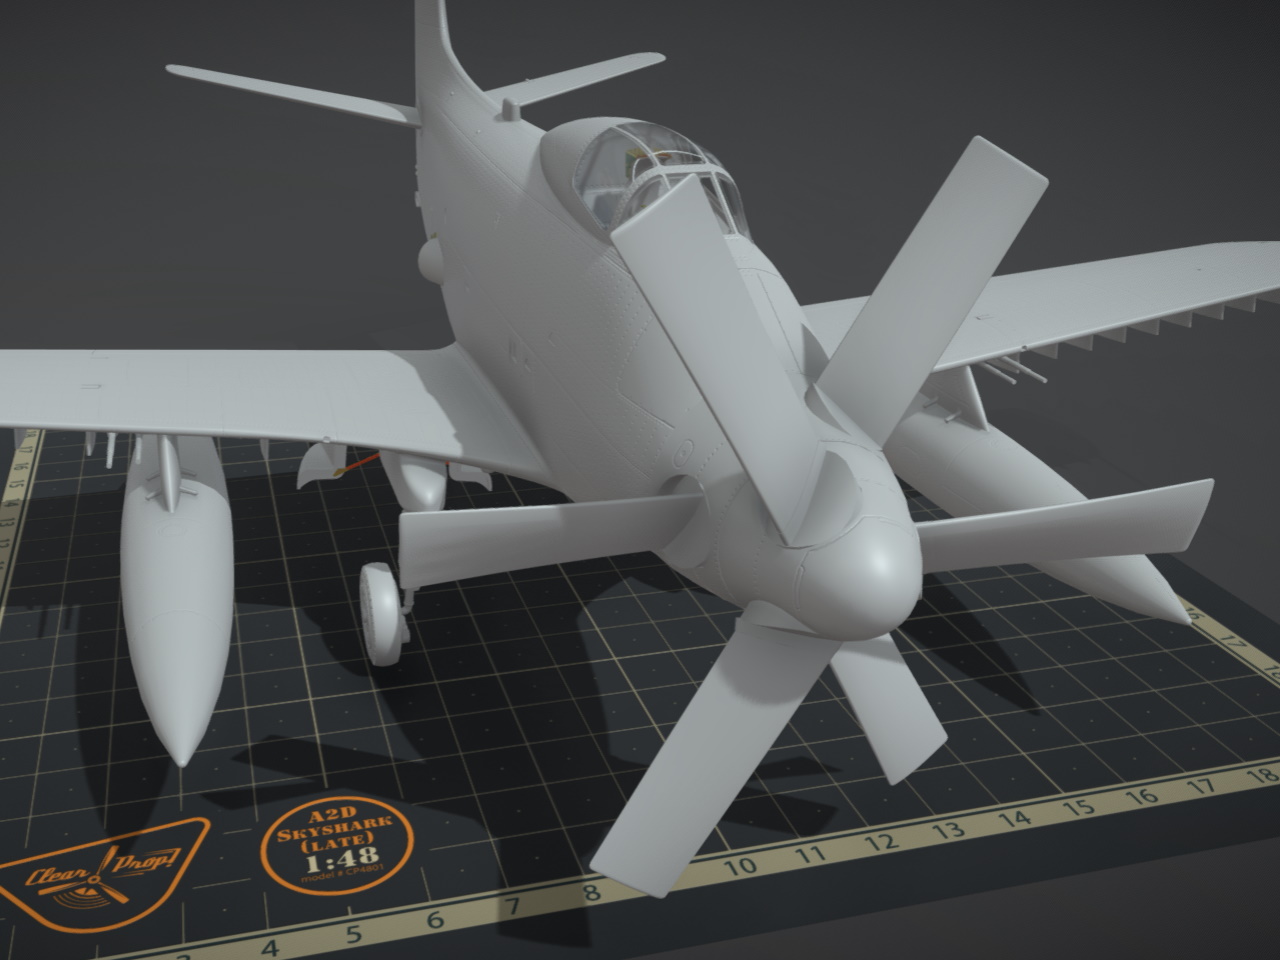 AeroScale :: News Clearprop: Skyshark 3D Interactive Model